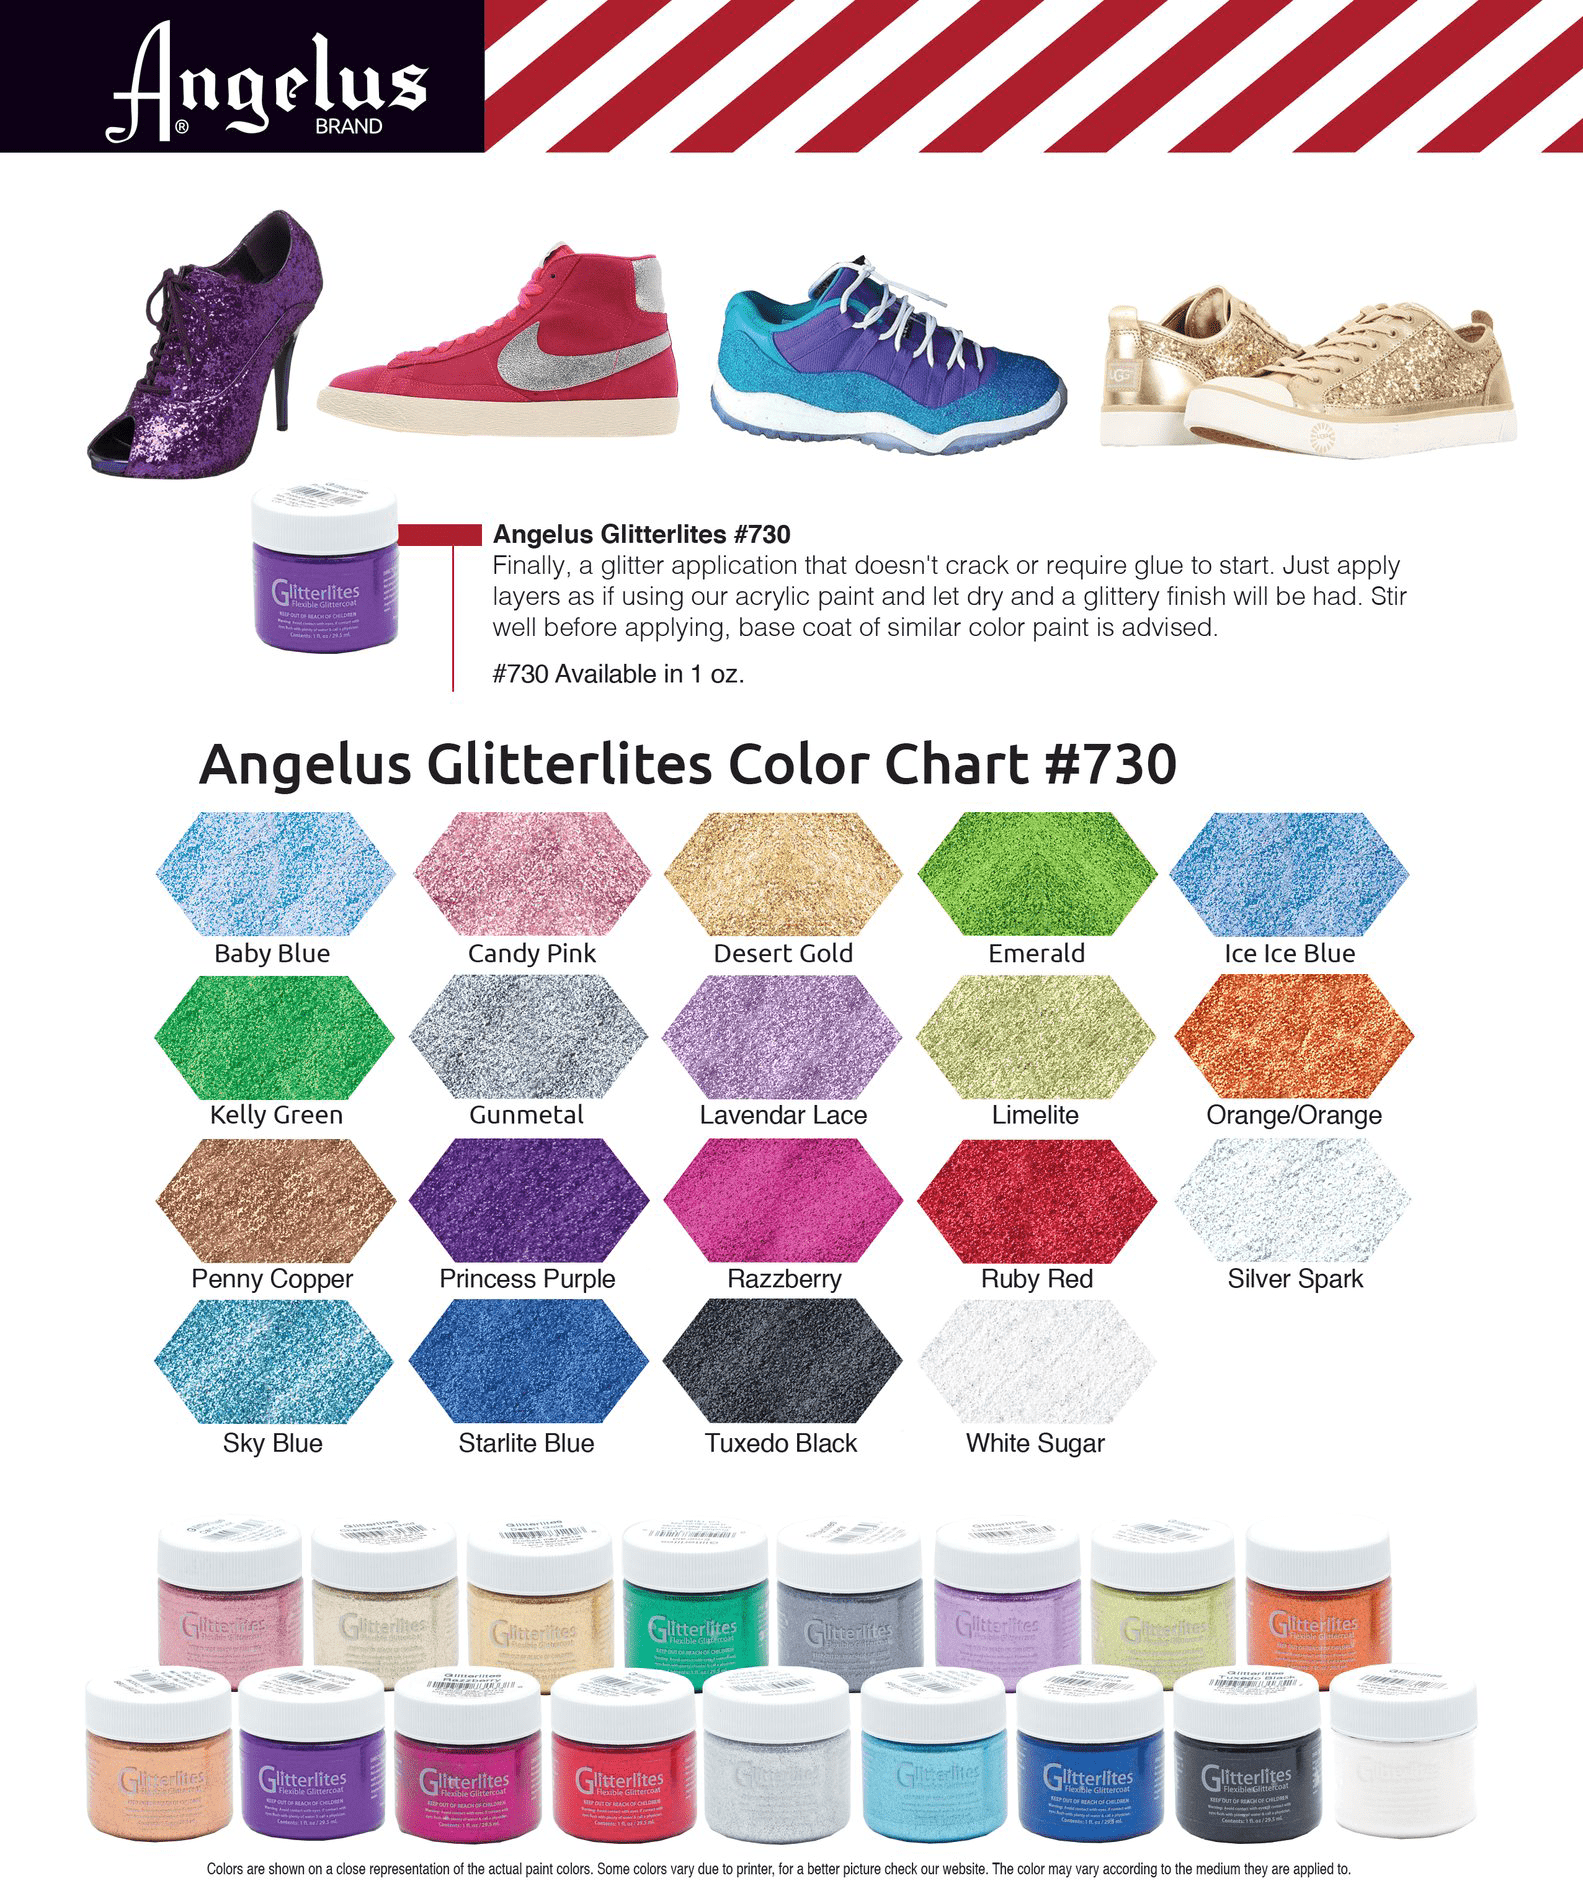 Farby brokatowe Angelus Glitterlites - karta kolorów